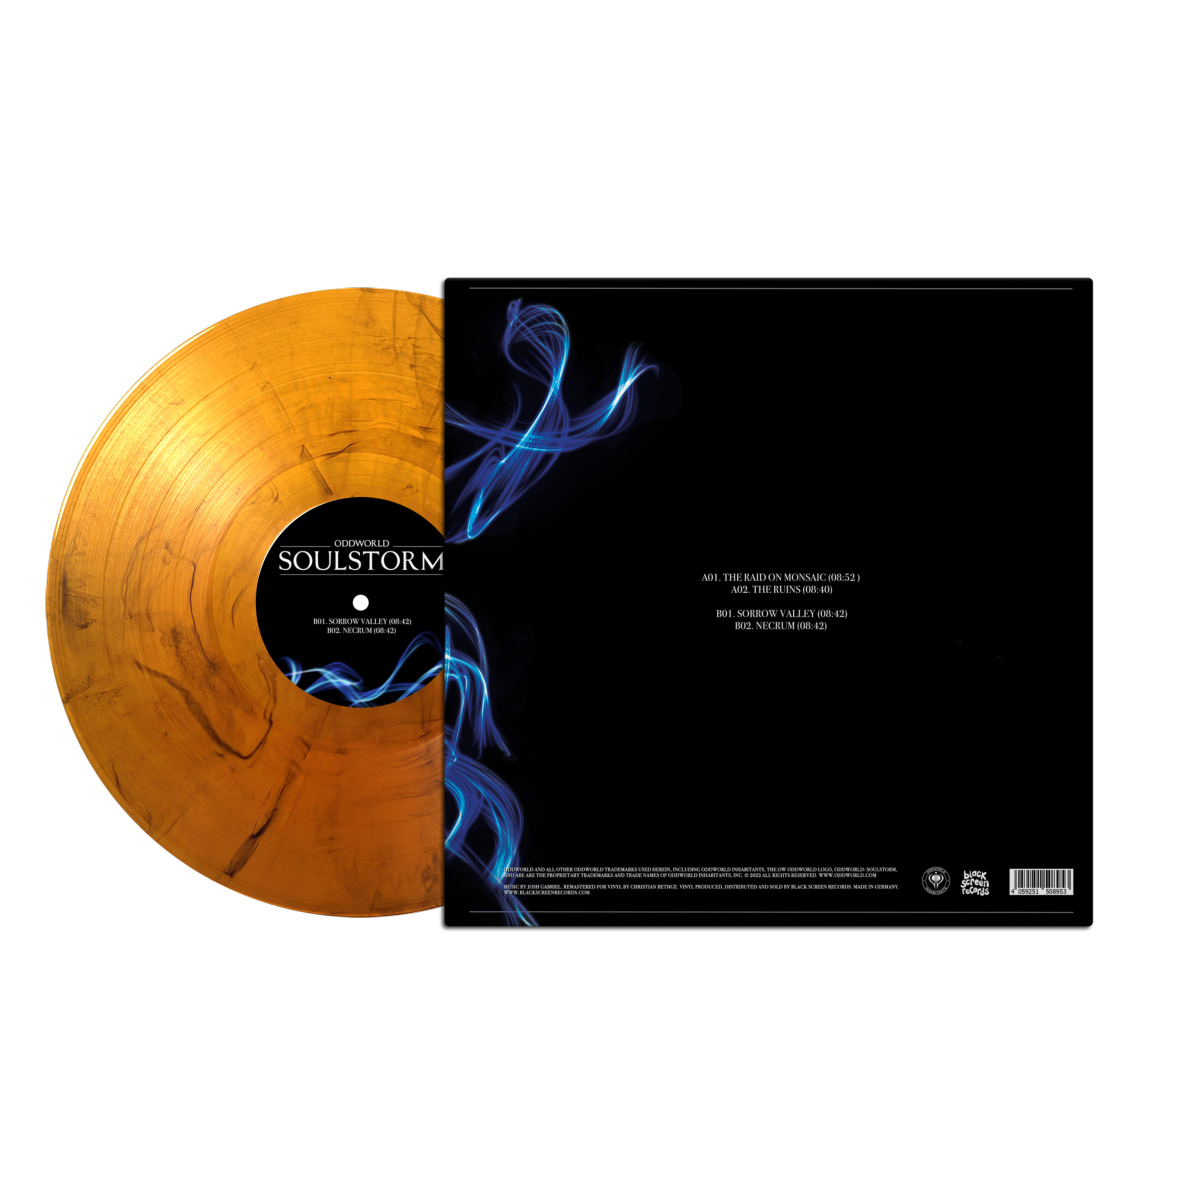 Oddworld: Soulstorm (Original Soundtrack) Vinyle - 1LP